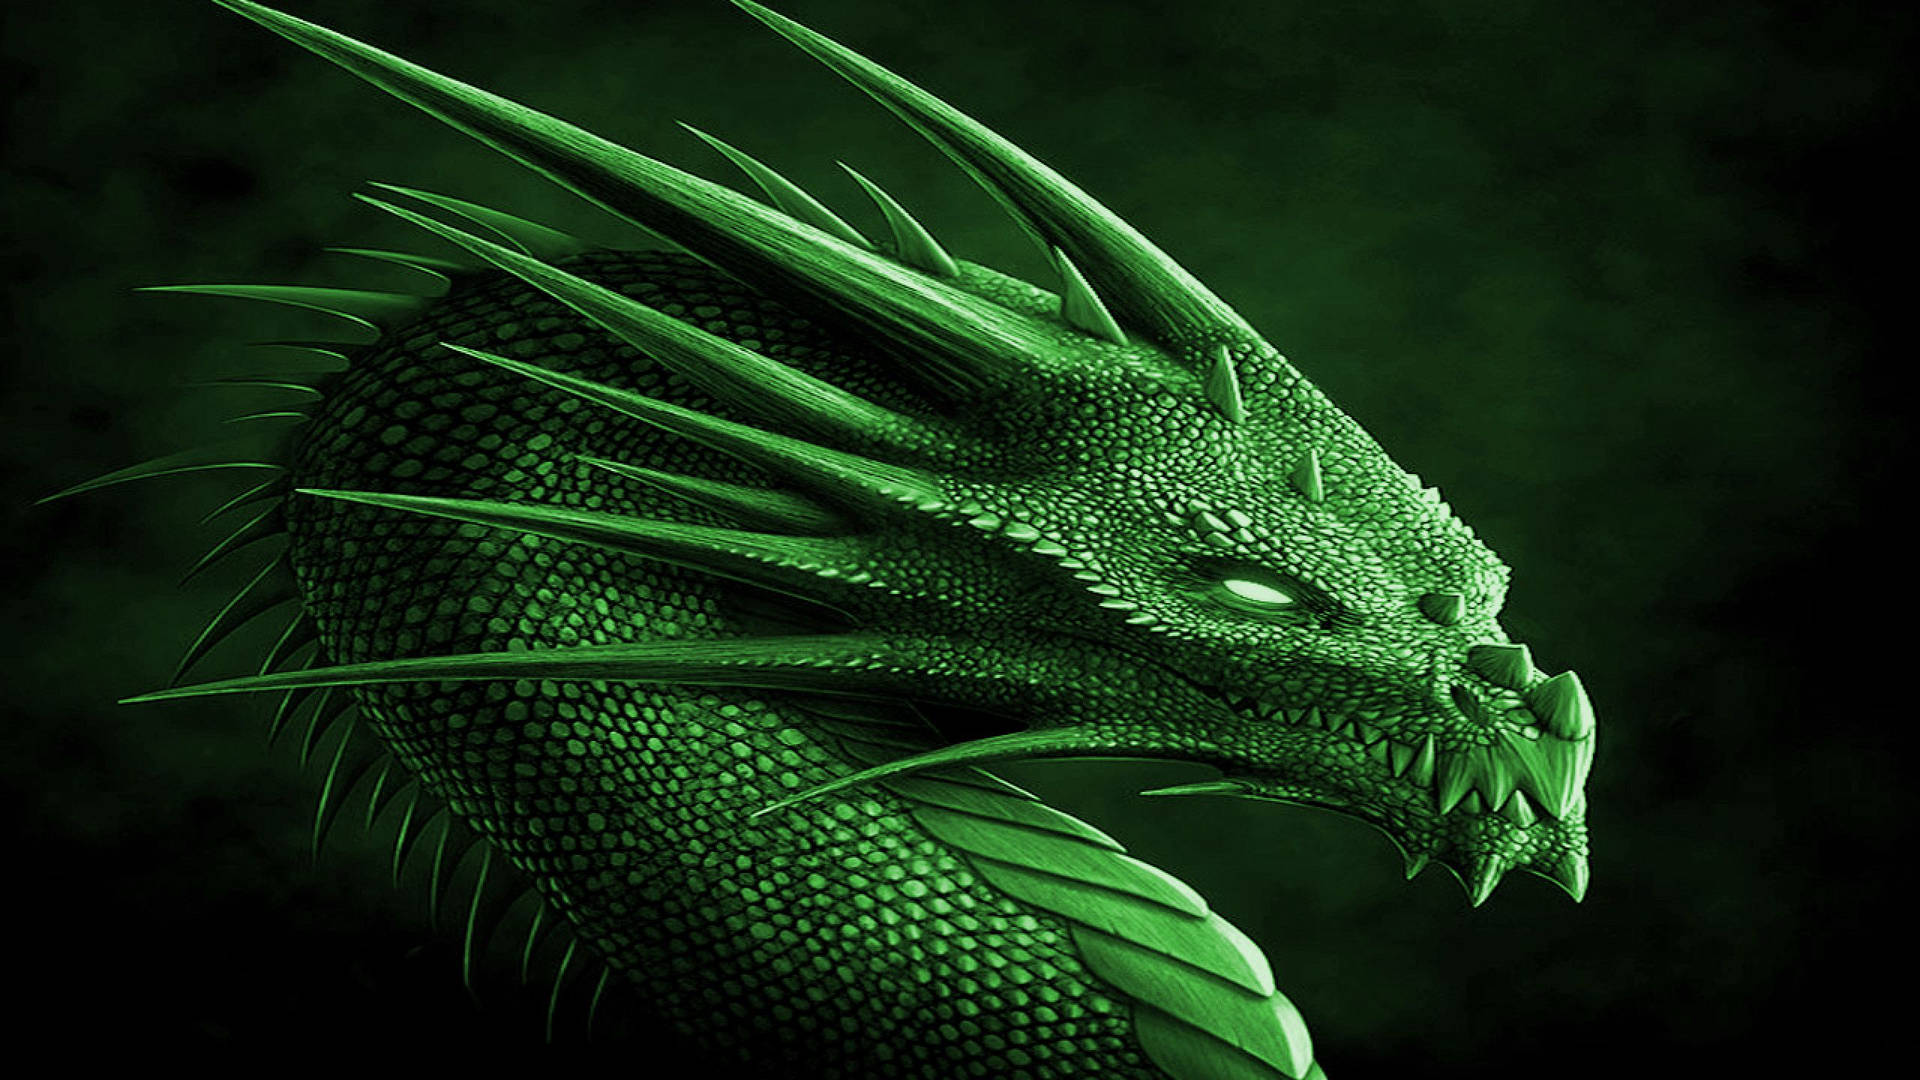 Vibrant Green Earth Dragon Background